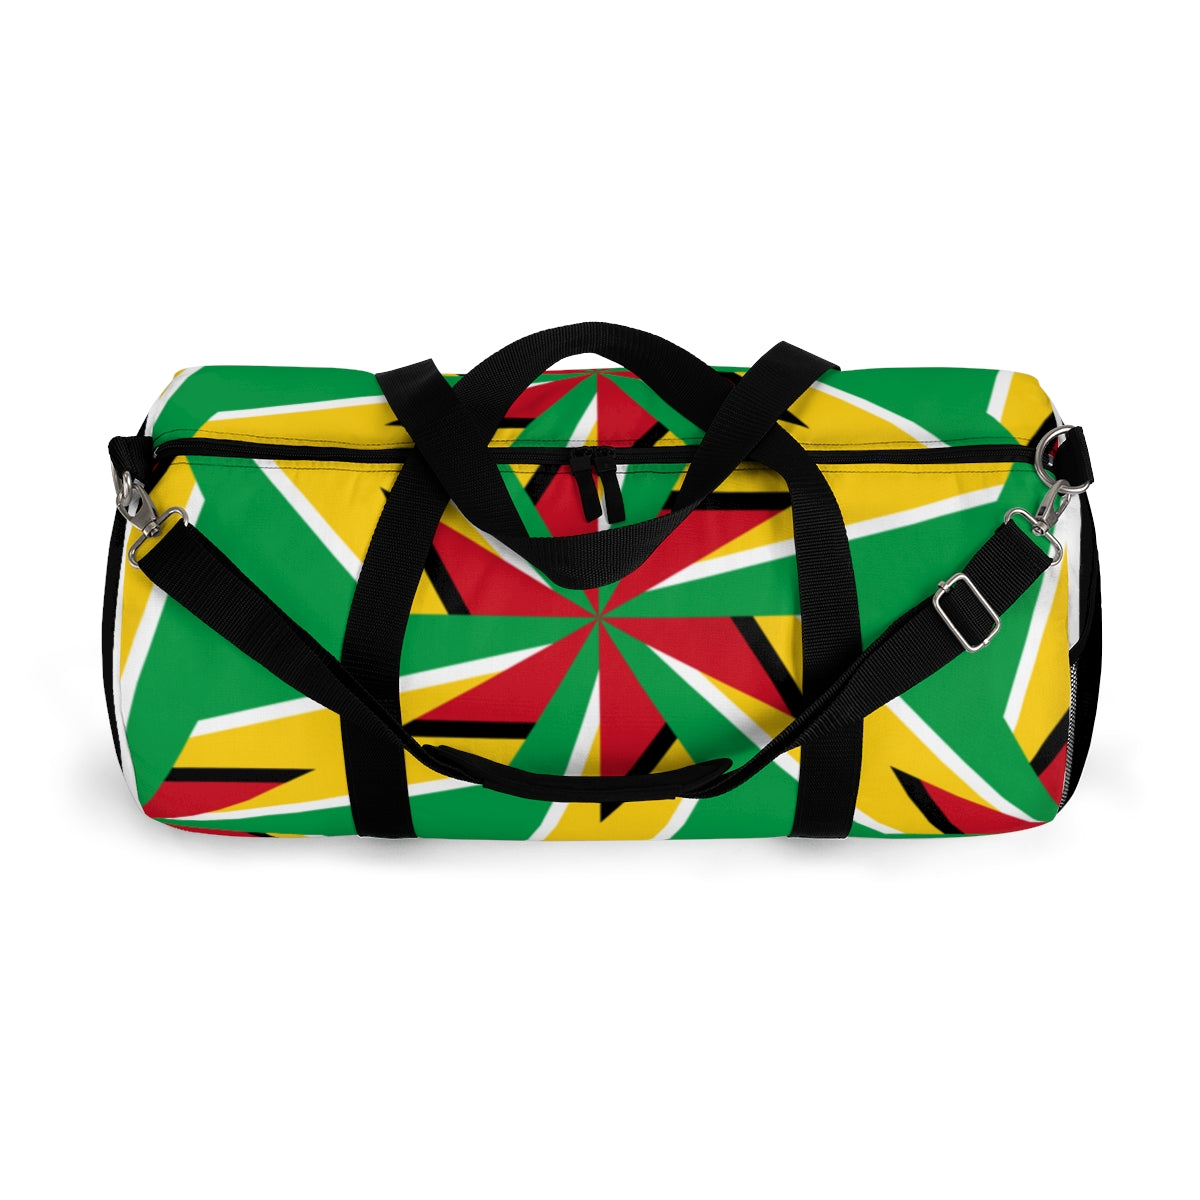 Abstract Guyana Flag Duffel Bag.